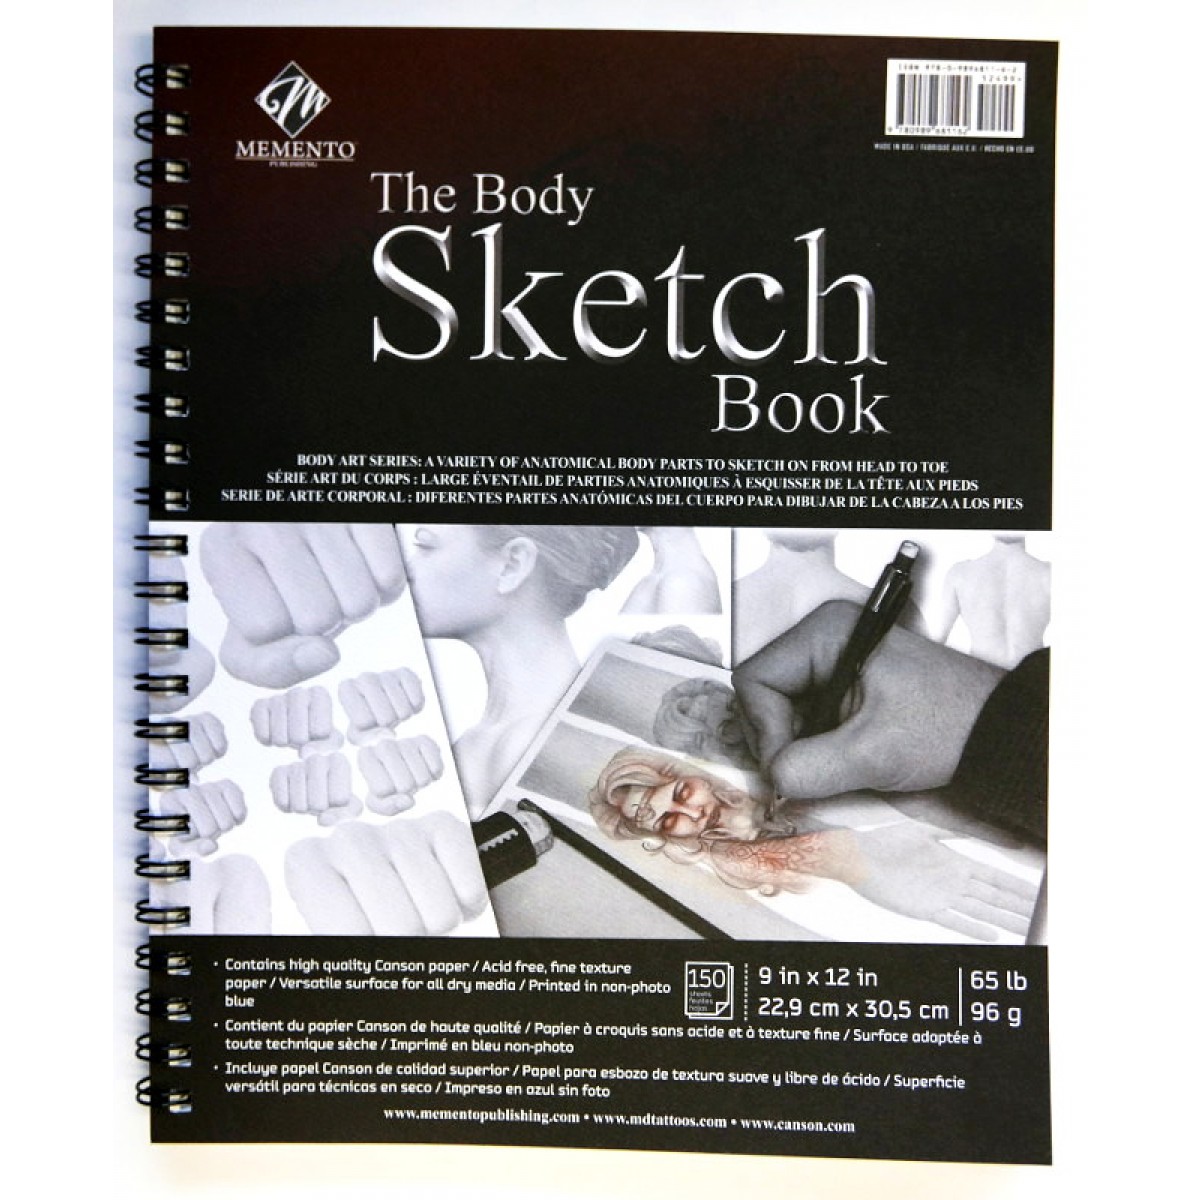 The Body Sketch Book